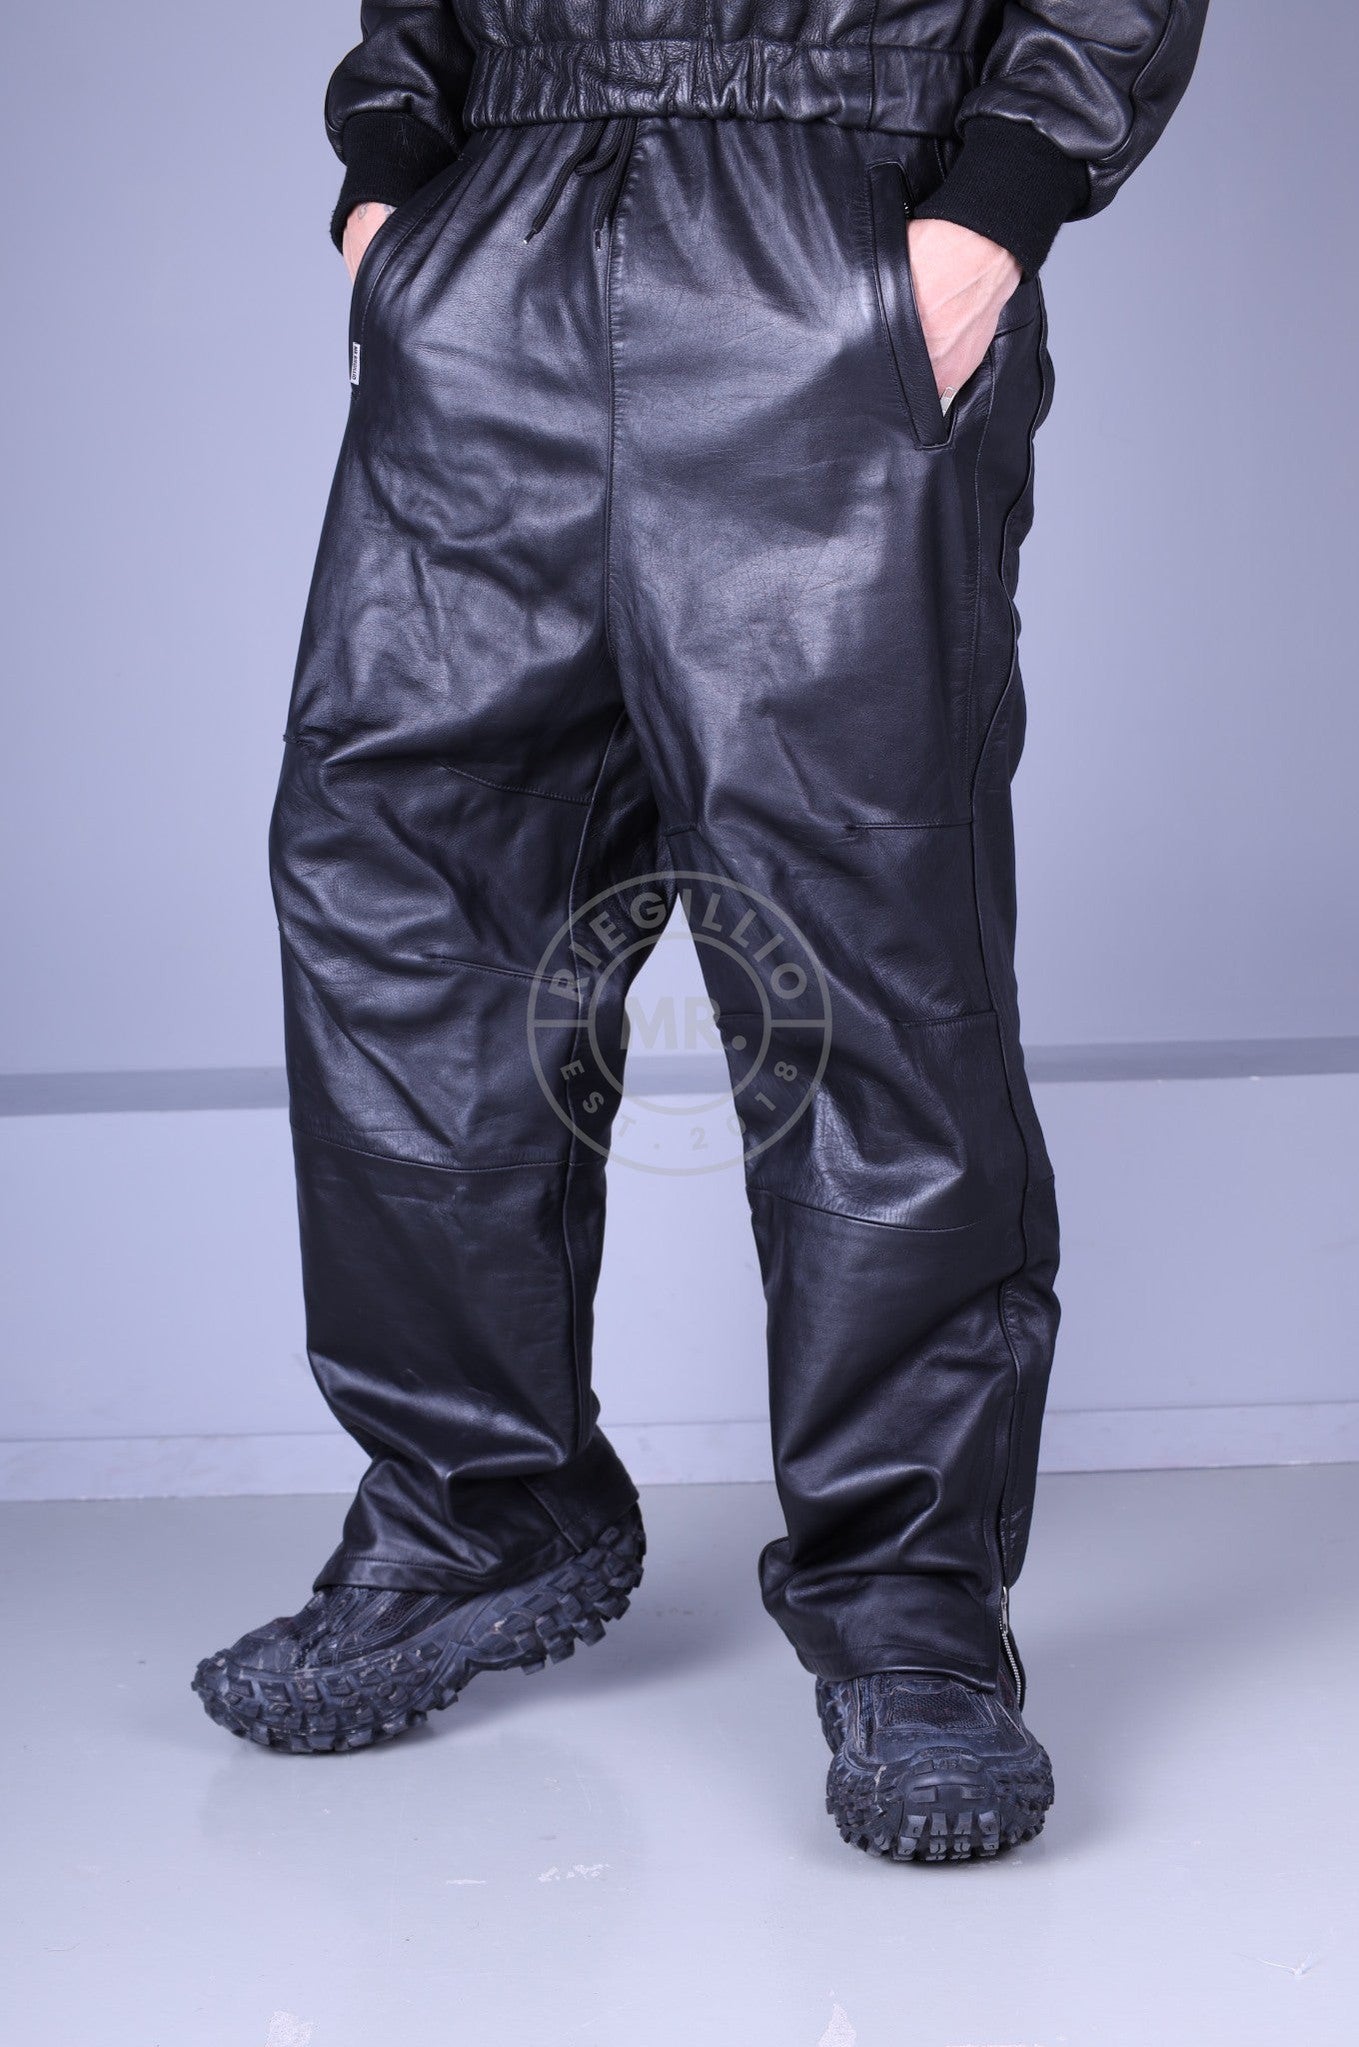 "Xtreme" Leather Pants - Full Black at MR. Riegillio